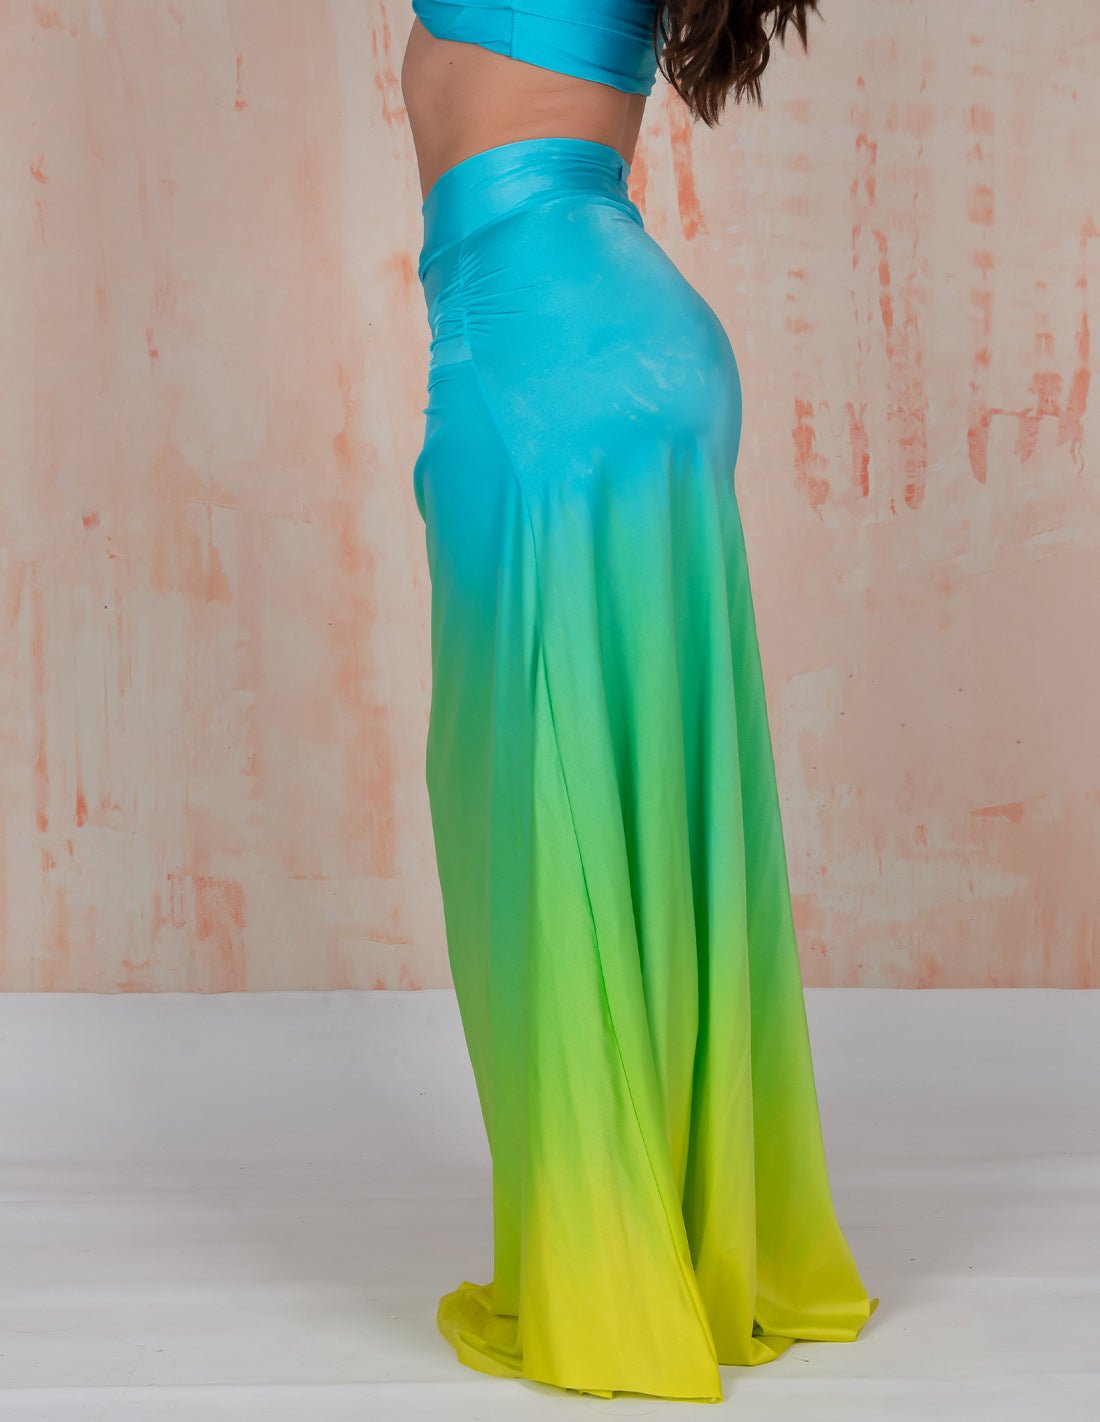 Regalia Skirt Sky Blue + Green + Yellow - Skirt - Entreaguas Wearable Art